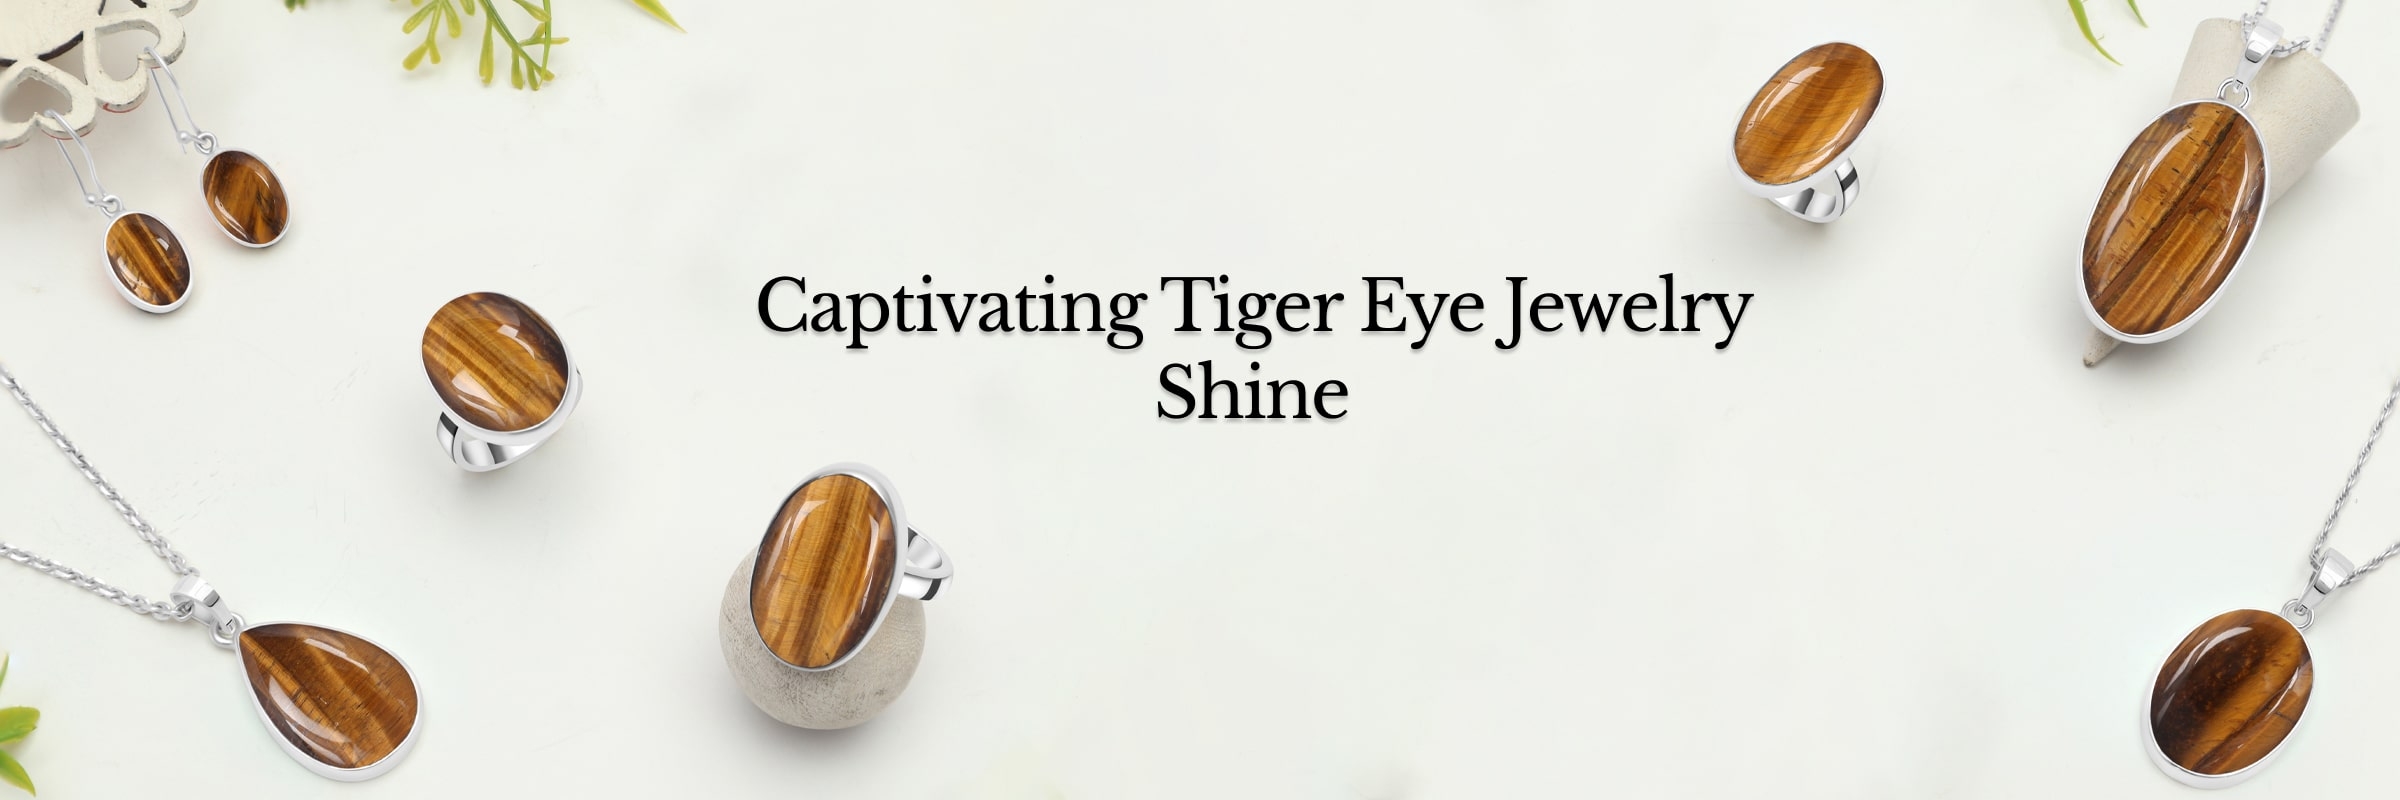 Tiger Eye Jewelry